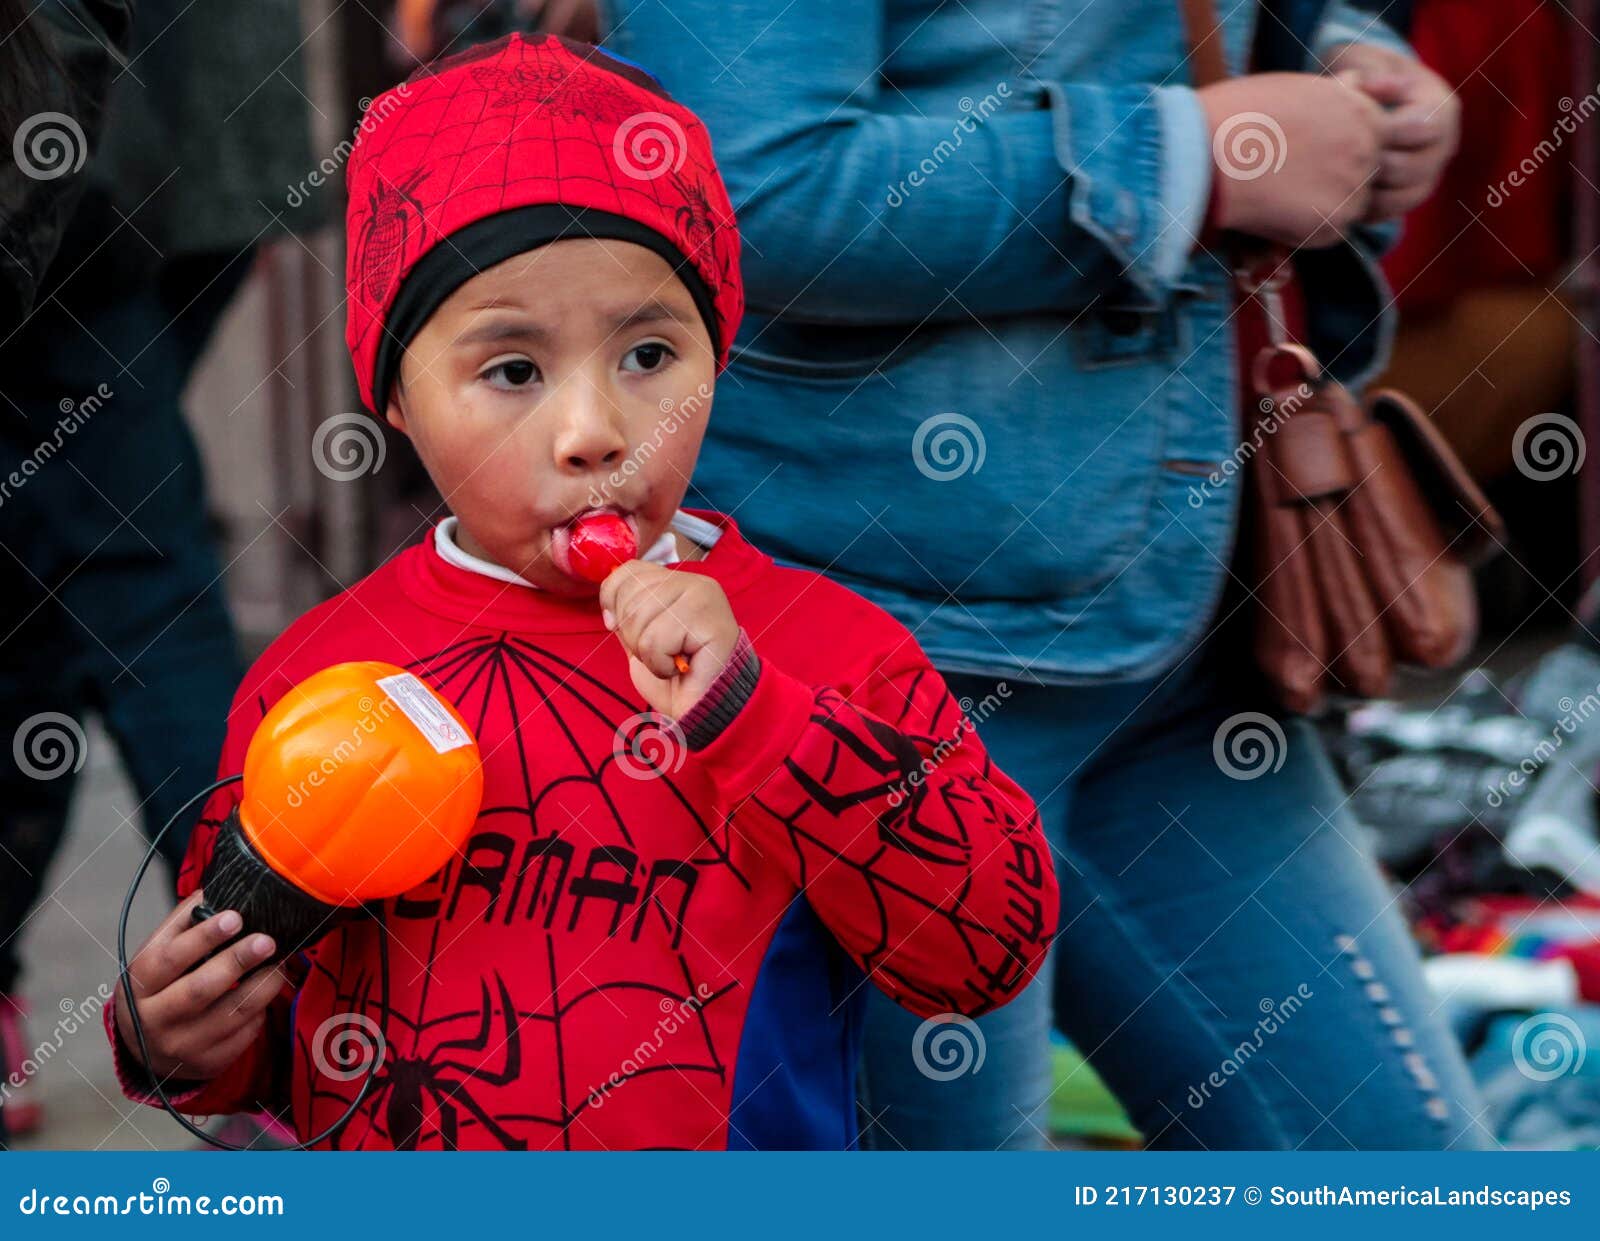 Boys Spiderman Costume, Halloween Spiderman Costume for Boys, Kids